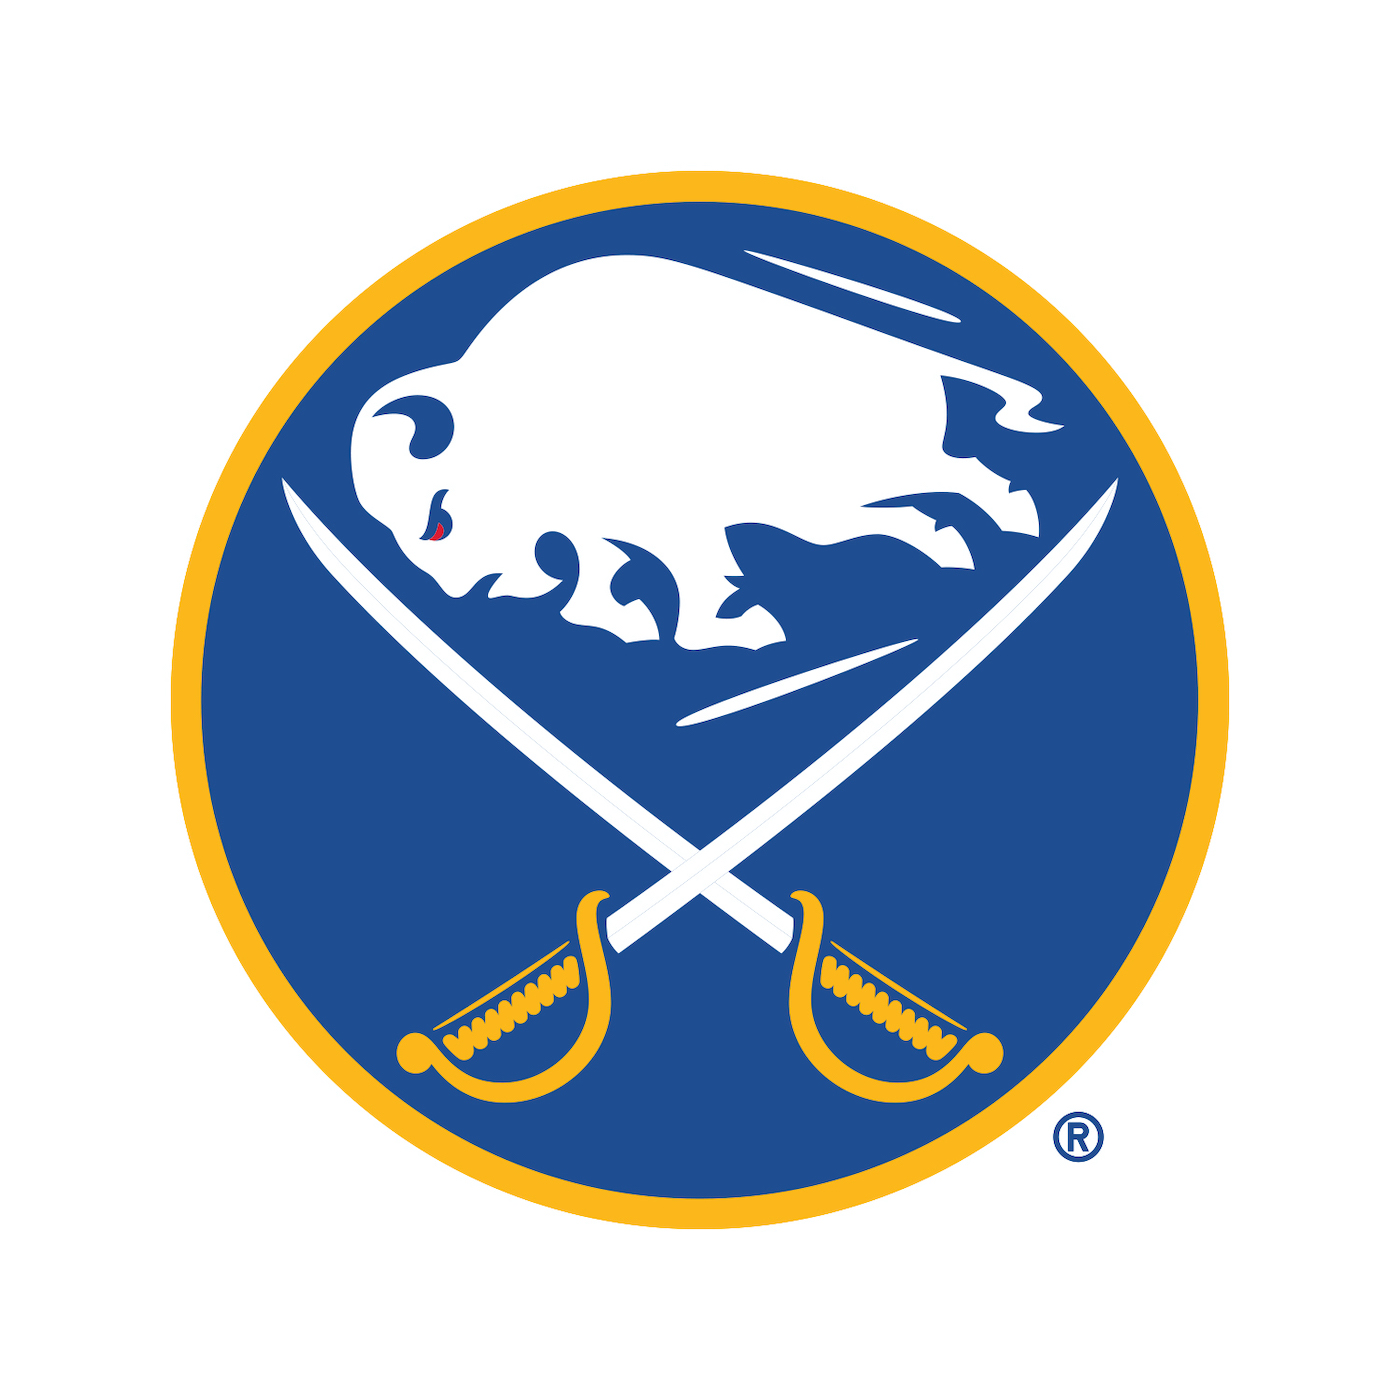 (Buffalo Sabres logo courtesy of Pegula Sports and Entertainment)